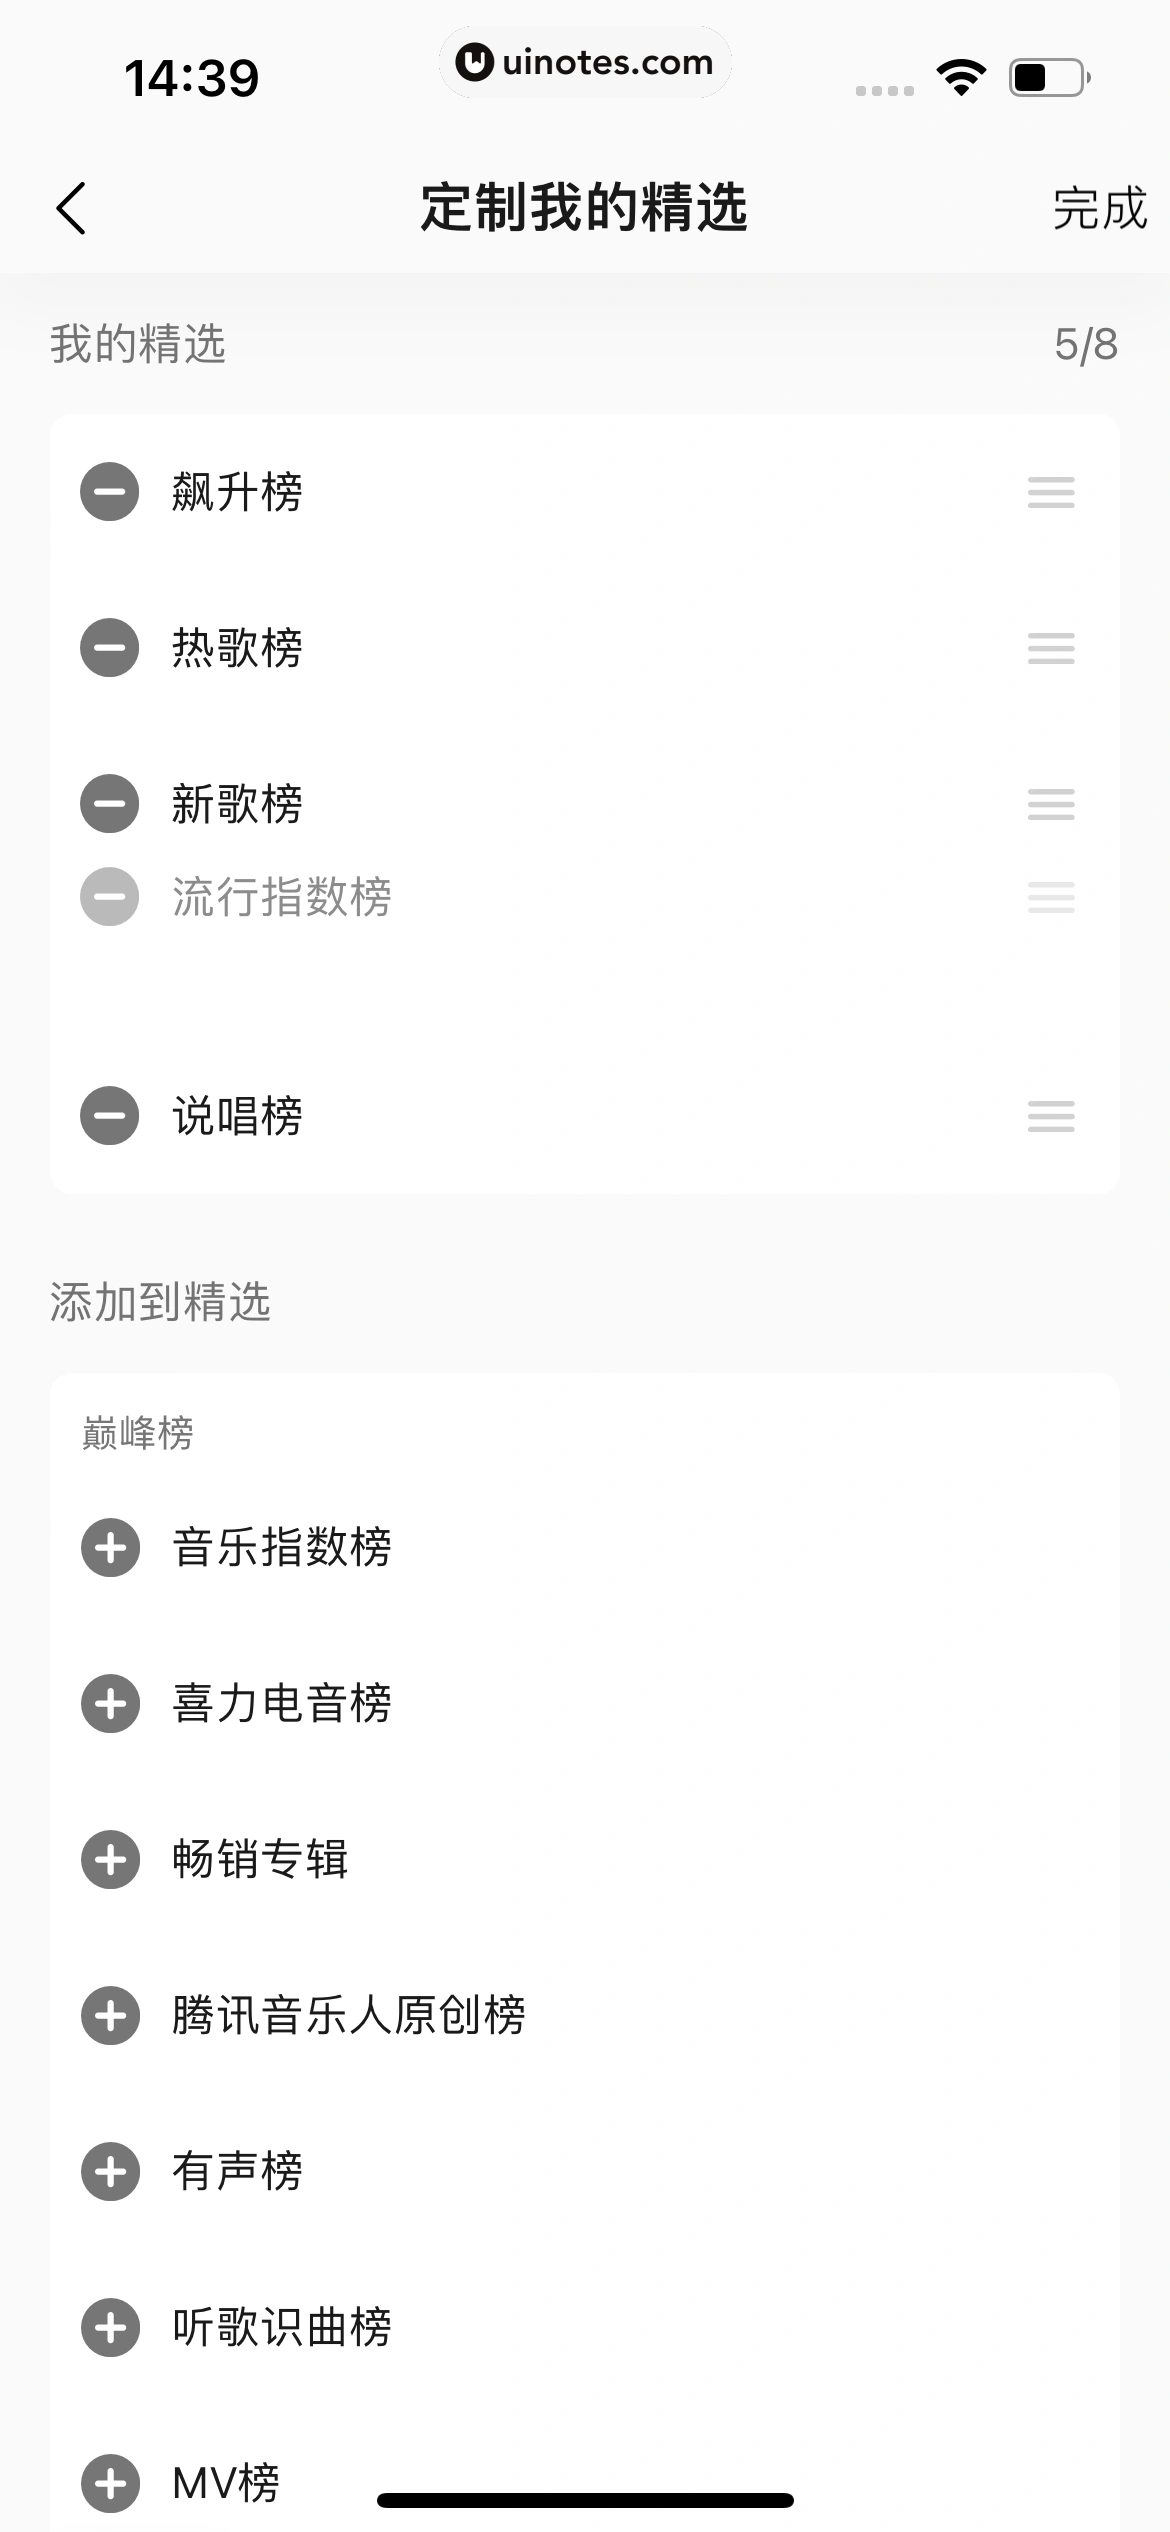 QQ音乐 App 截图 113 - UI Notes